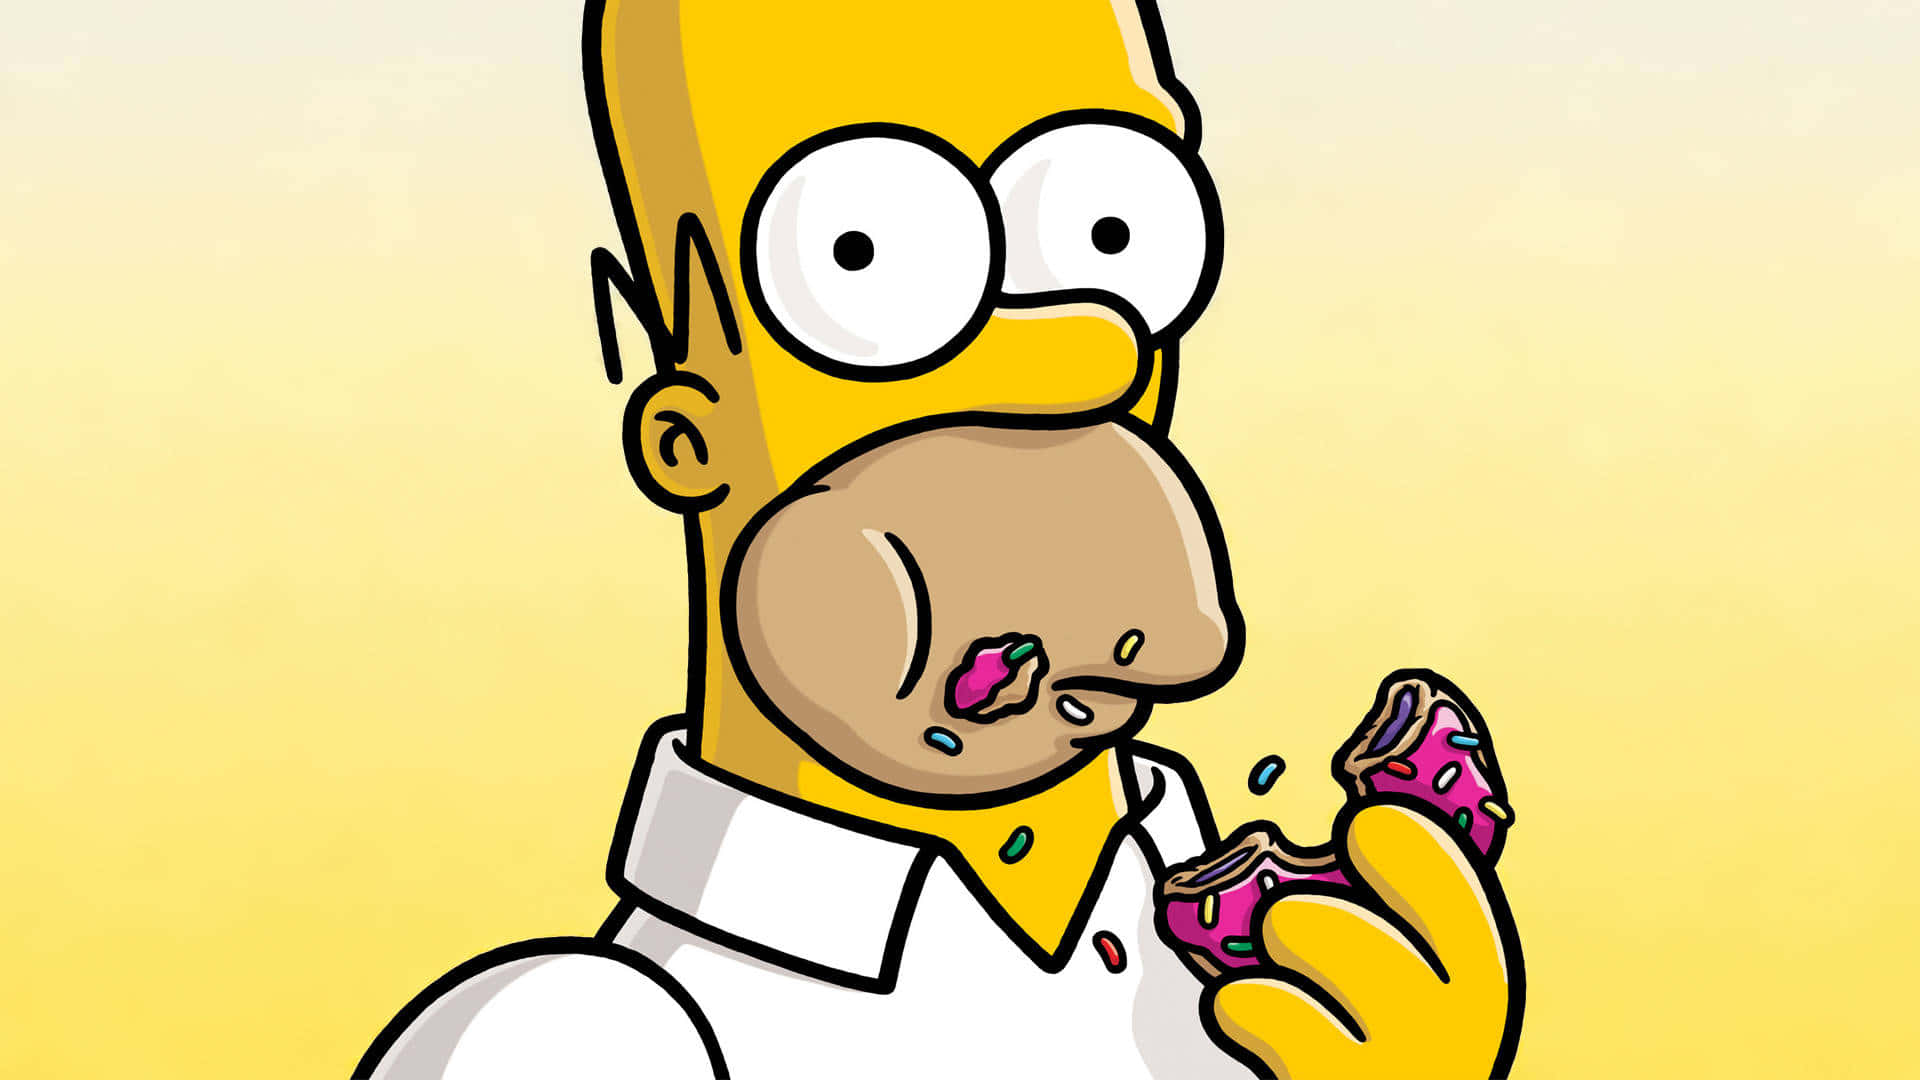 Homer Simpson enjoying delicious food